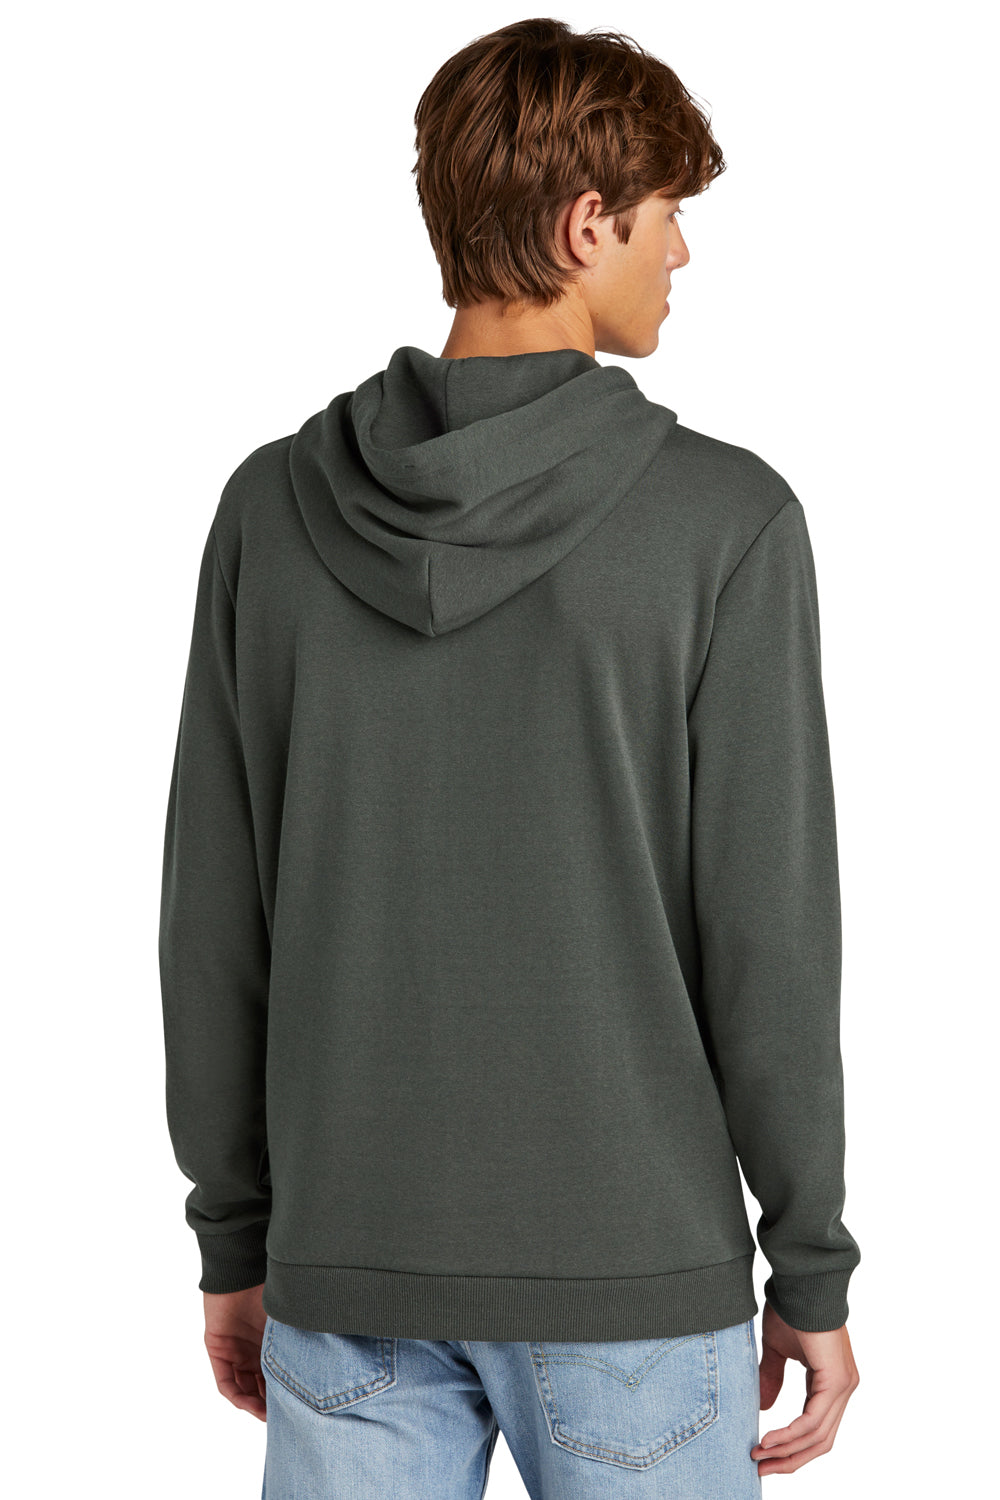 District DT1300 Mens Perfect Tri Fleece Hooded Sweatshirt Hoodie Deepest Grey Back